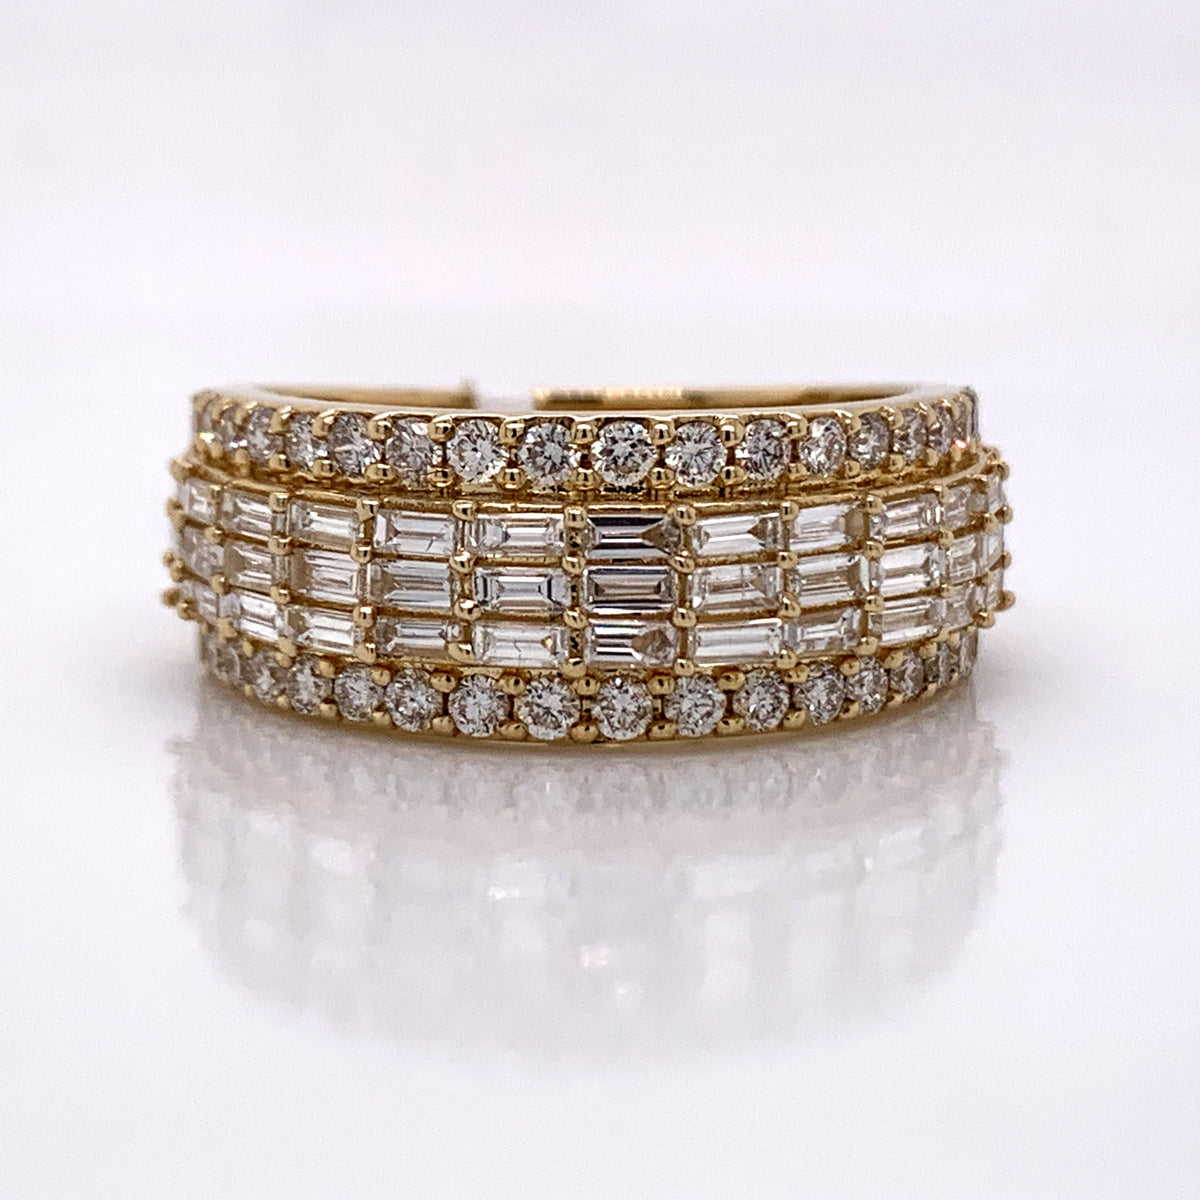 1.97CT Diamond 14K Gold Ring - White Carat Diamonds 